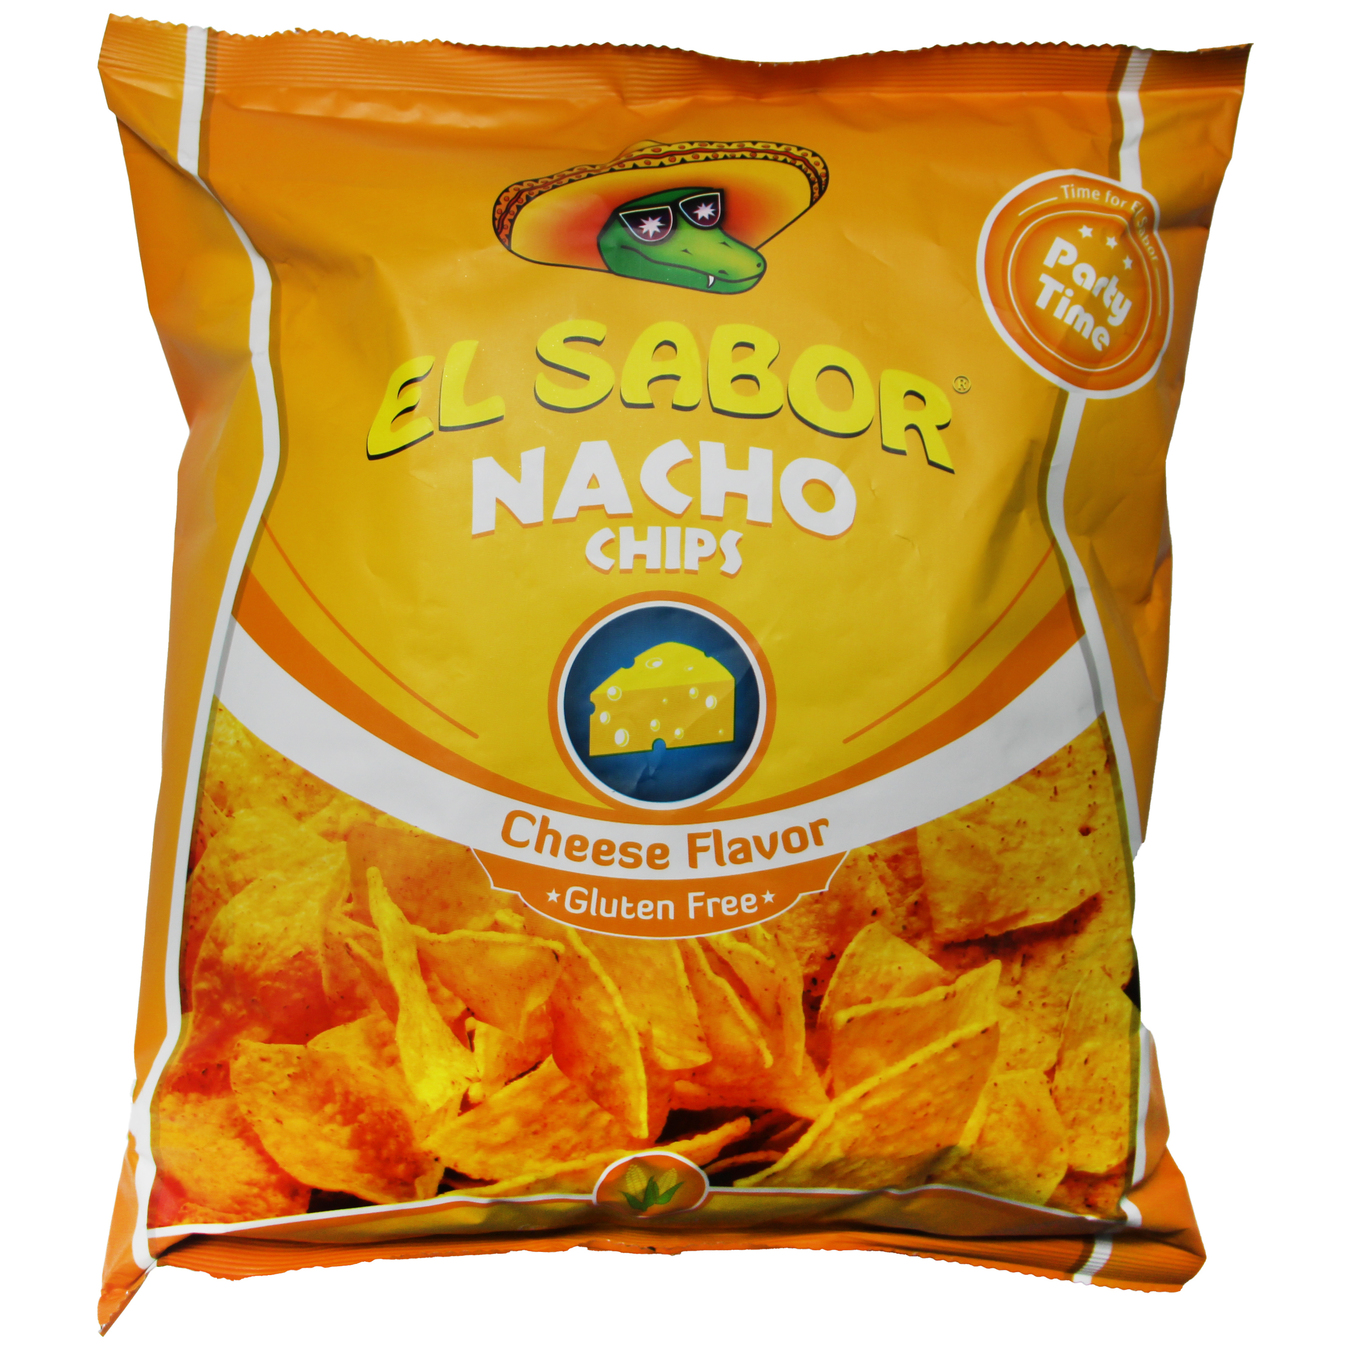 El Sabor Nacho Chips with Cheese Flavor 225g